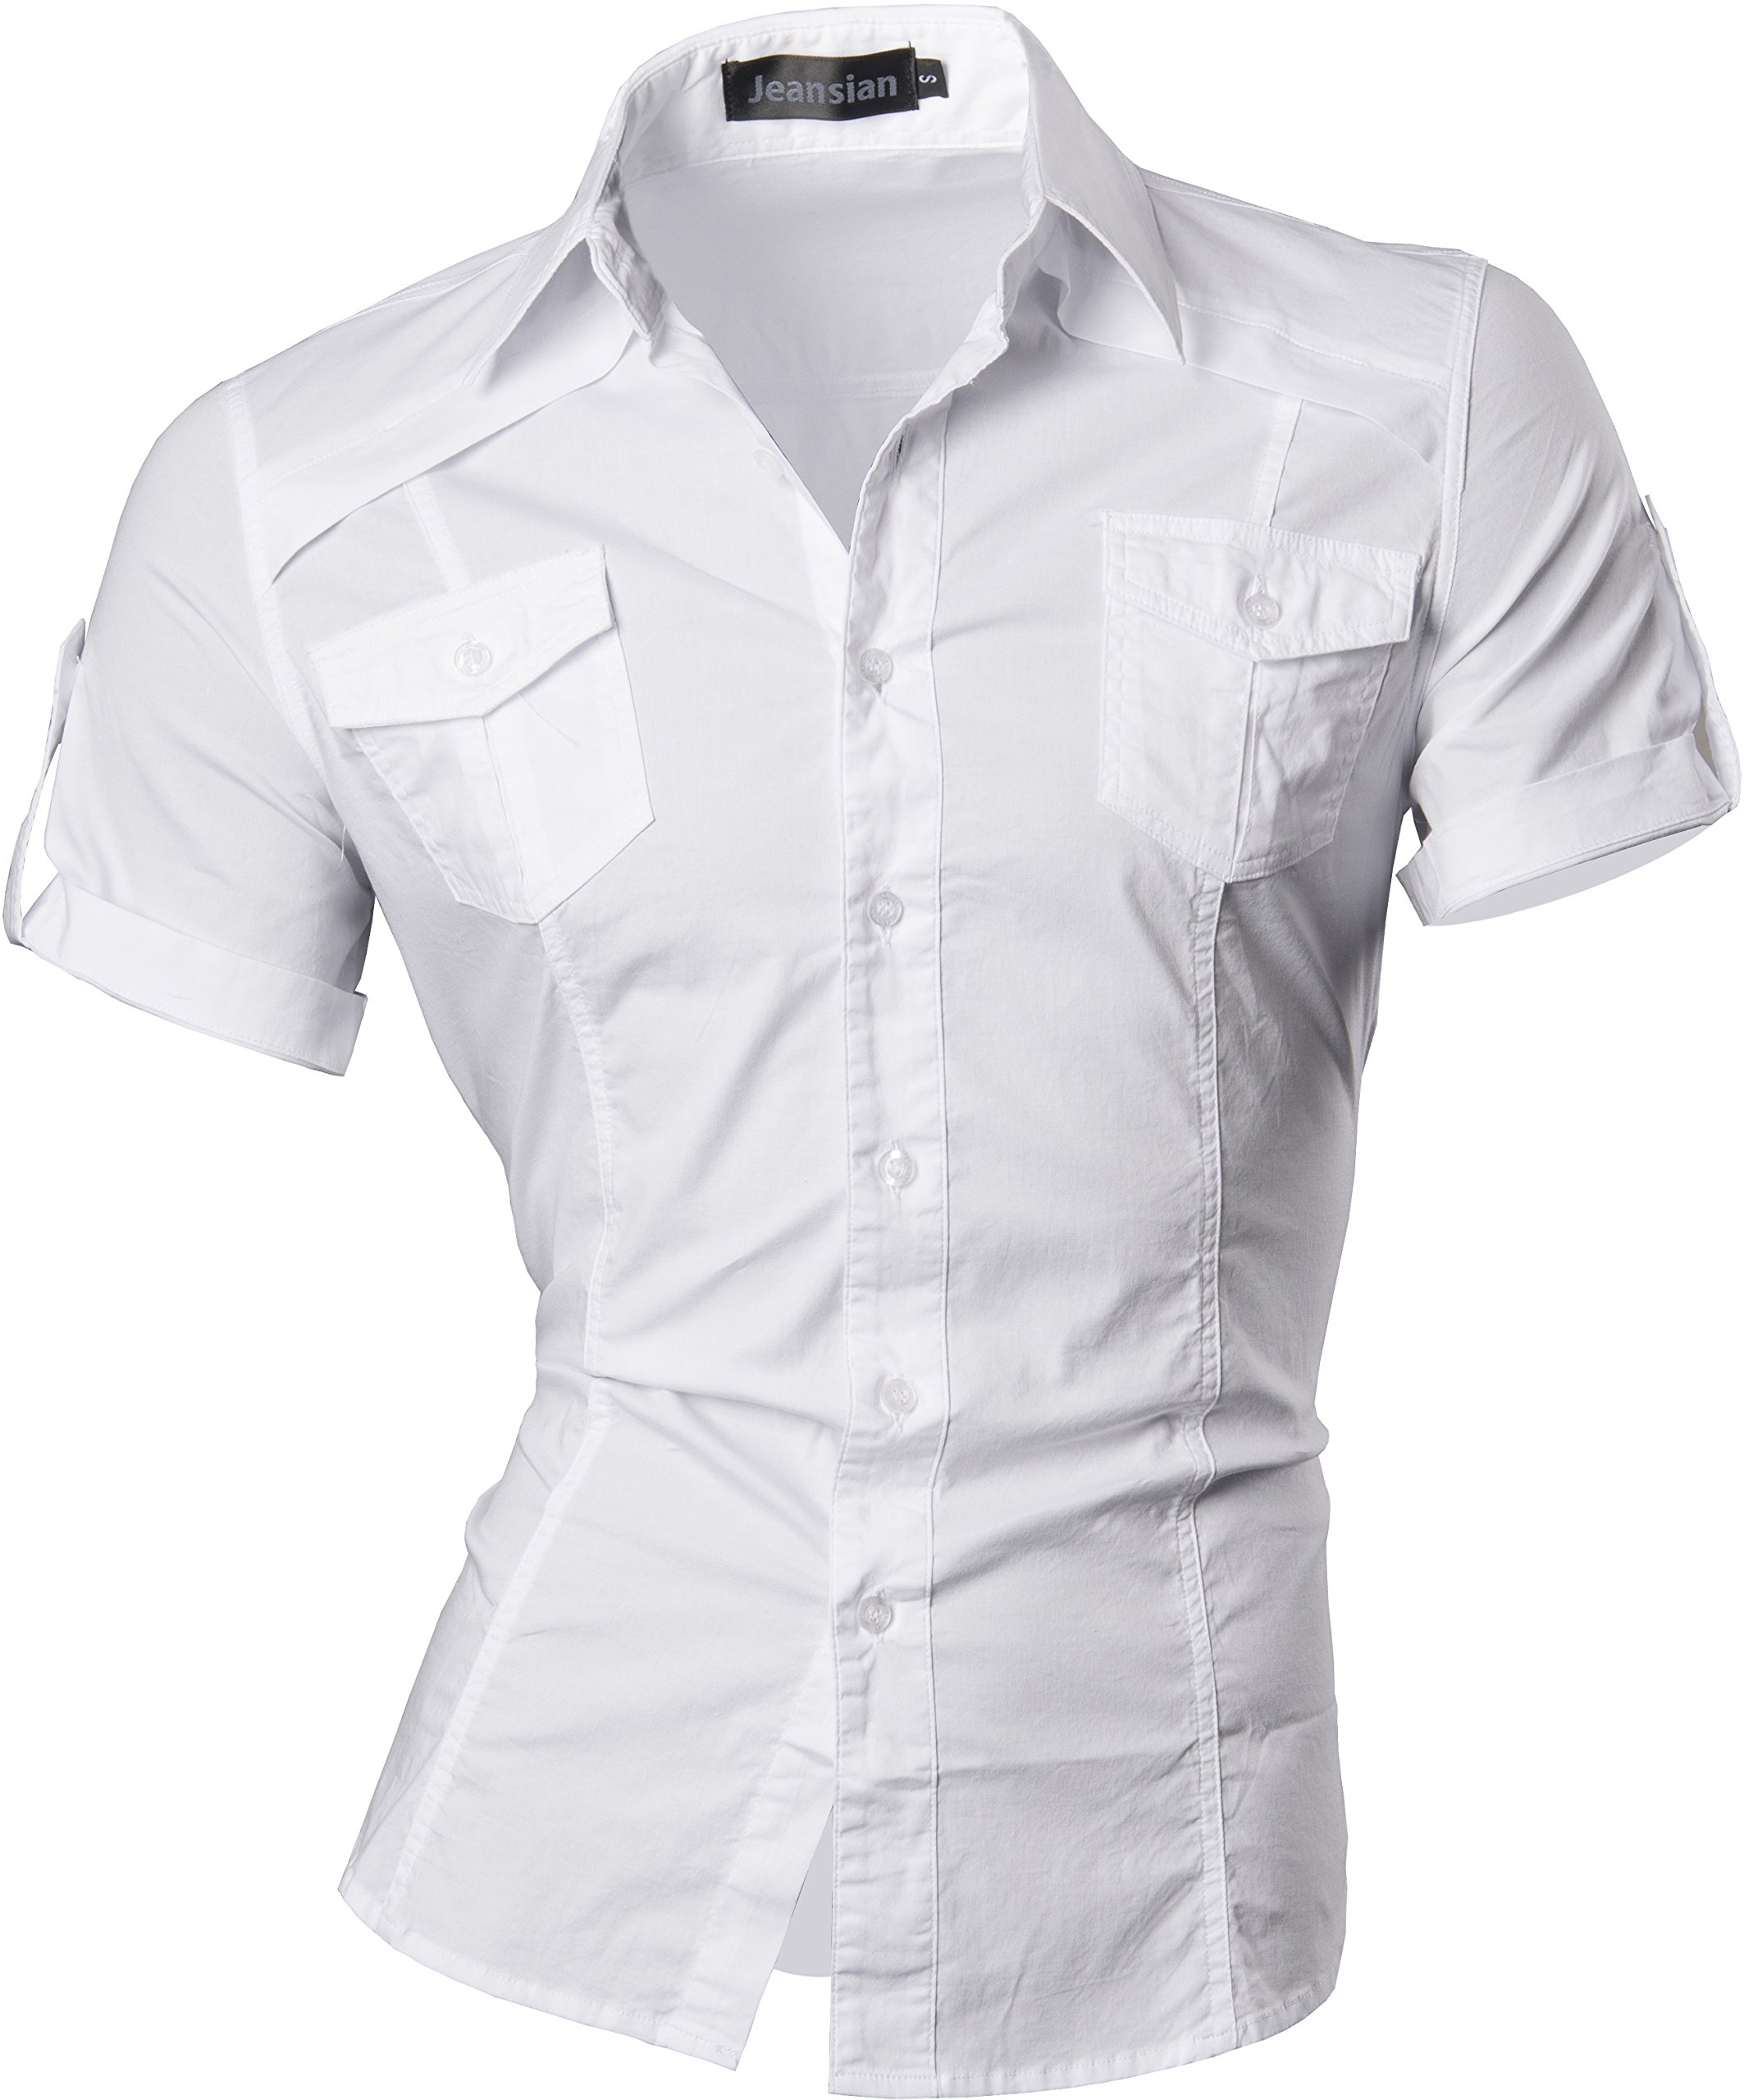 jeansian Herren Freizeit Hemden Shirt Tops Mode Langarmlig Men's Casual Dress Slim Fit 8360 White XXL